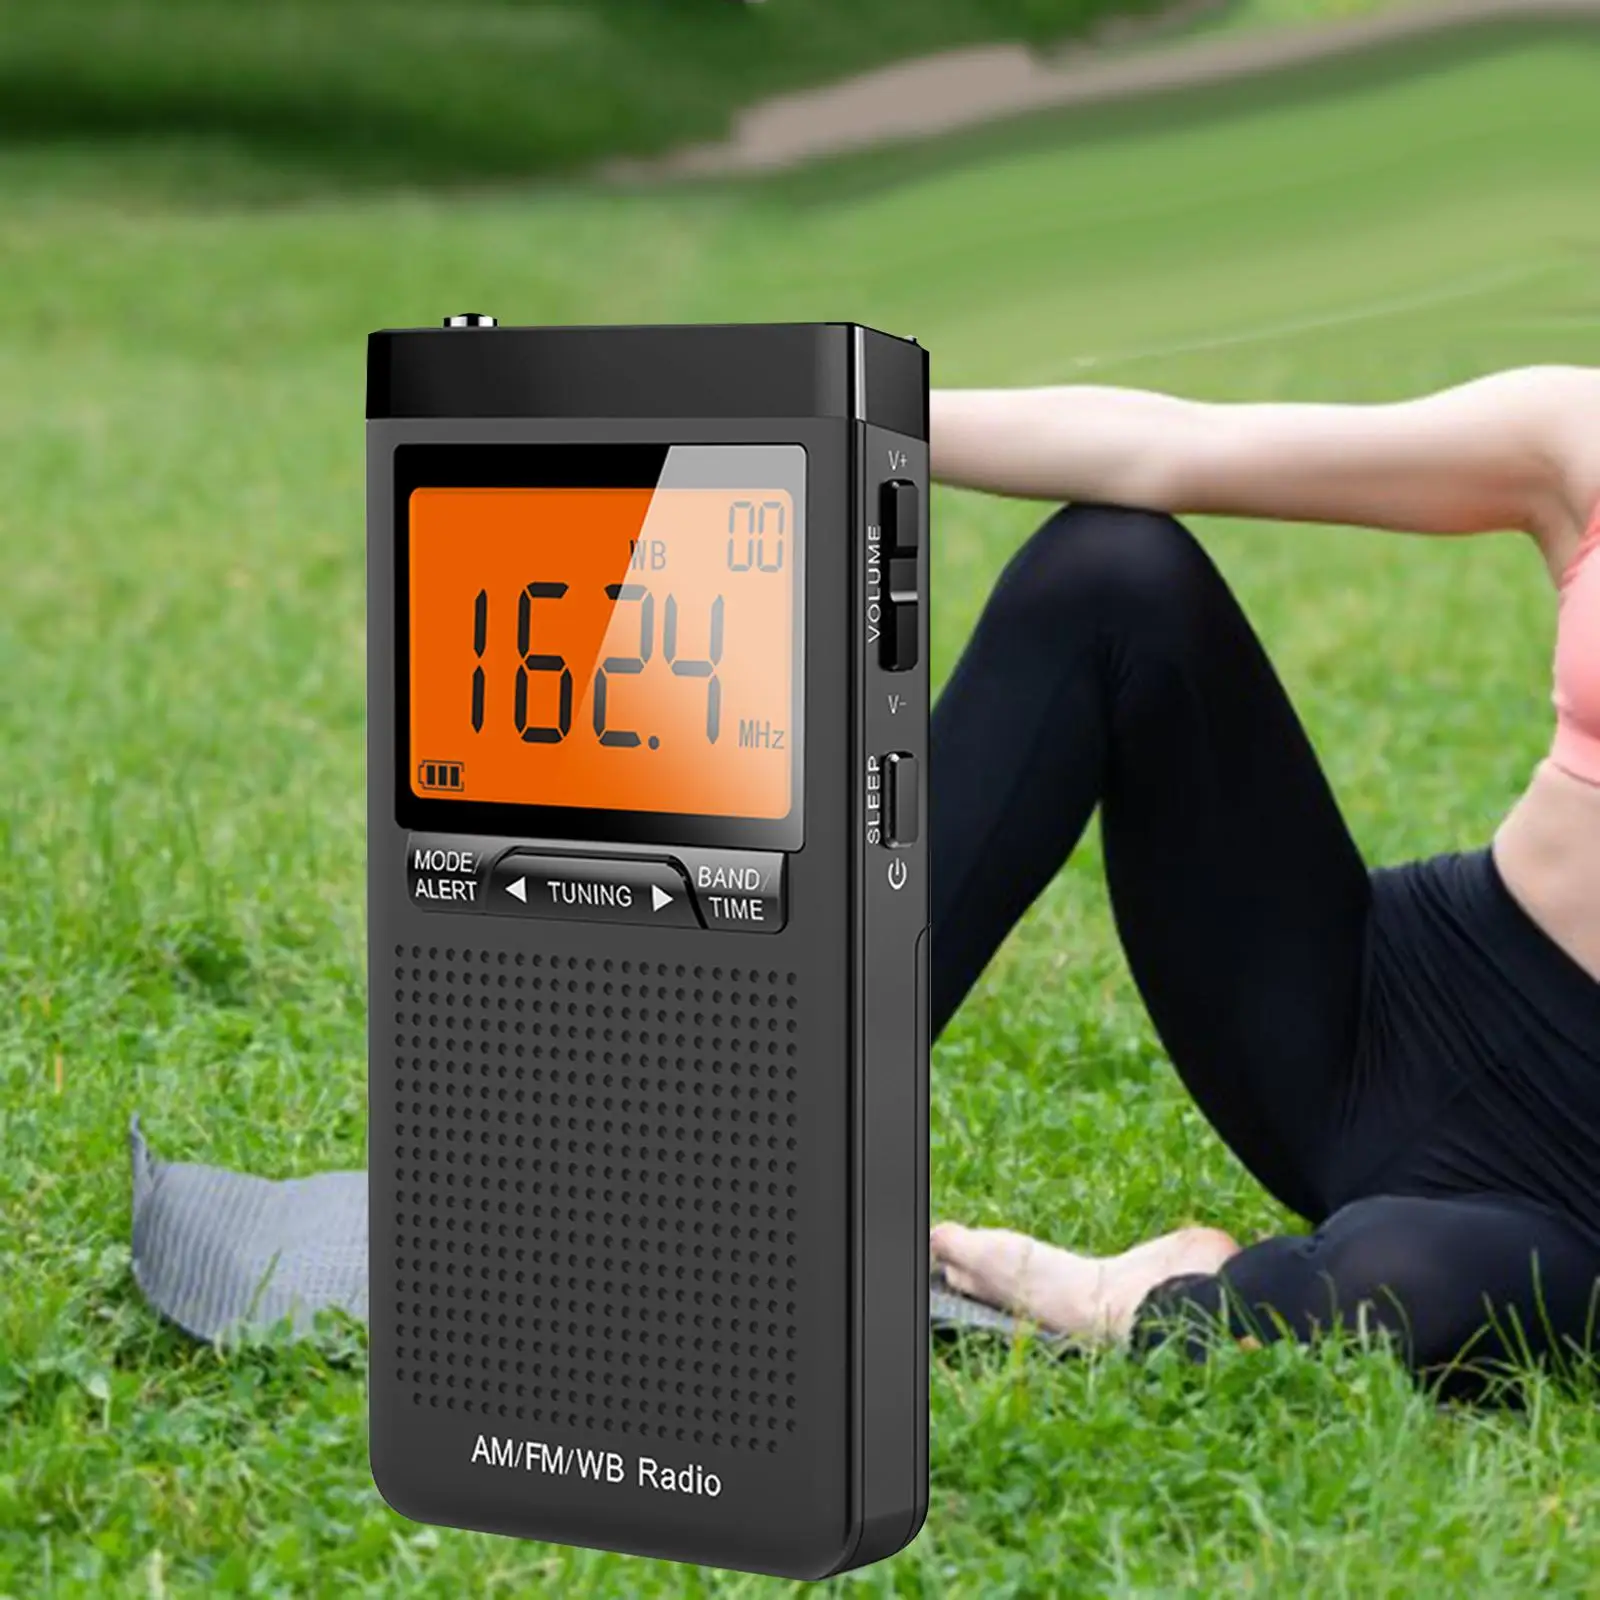 Portable Radio AM FM Digital Tuning 3.5mm Headphone Jack Pocket Radio Personal Radio for Gym Travel Camping Jogging Walk